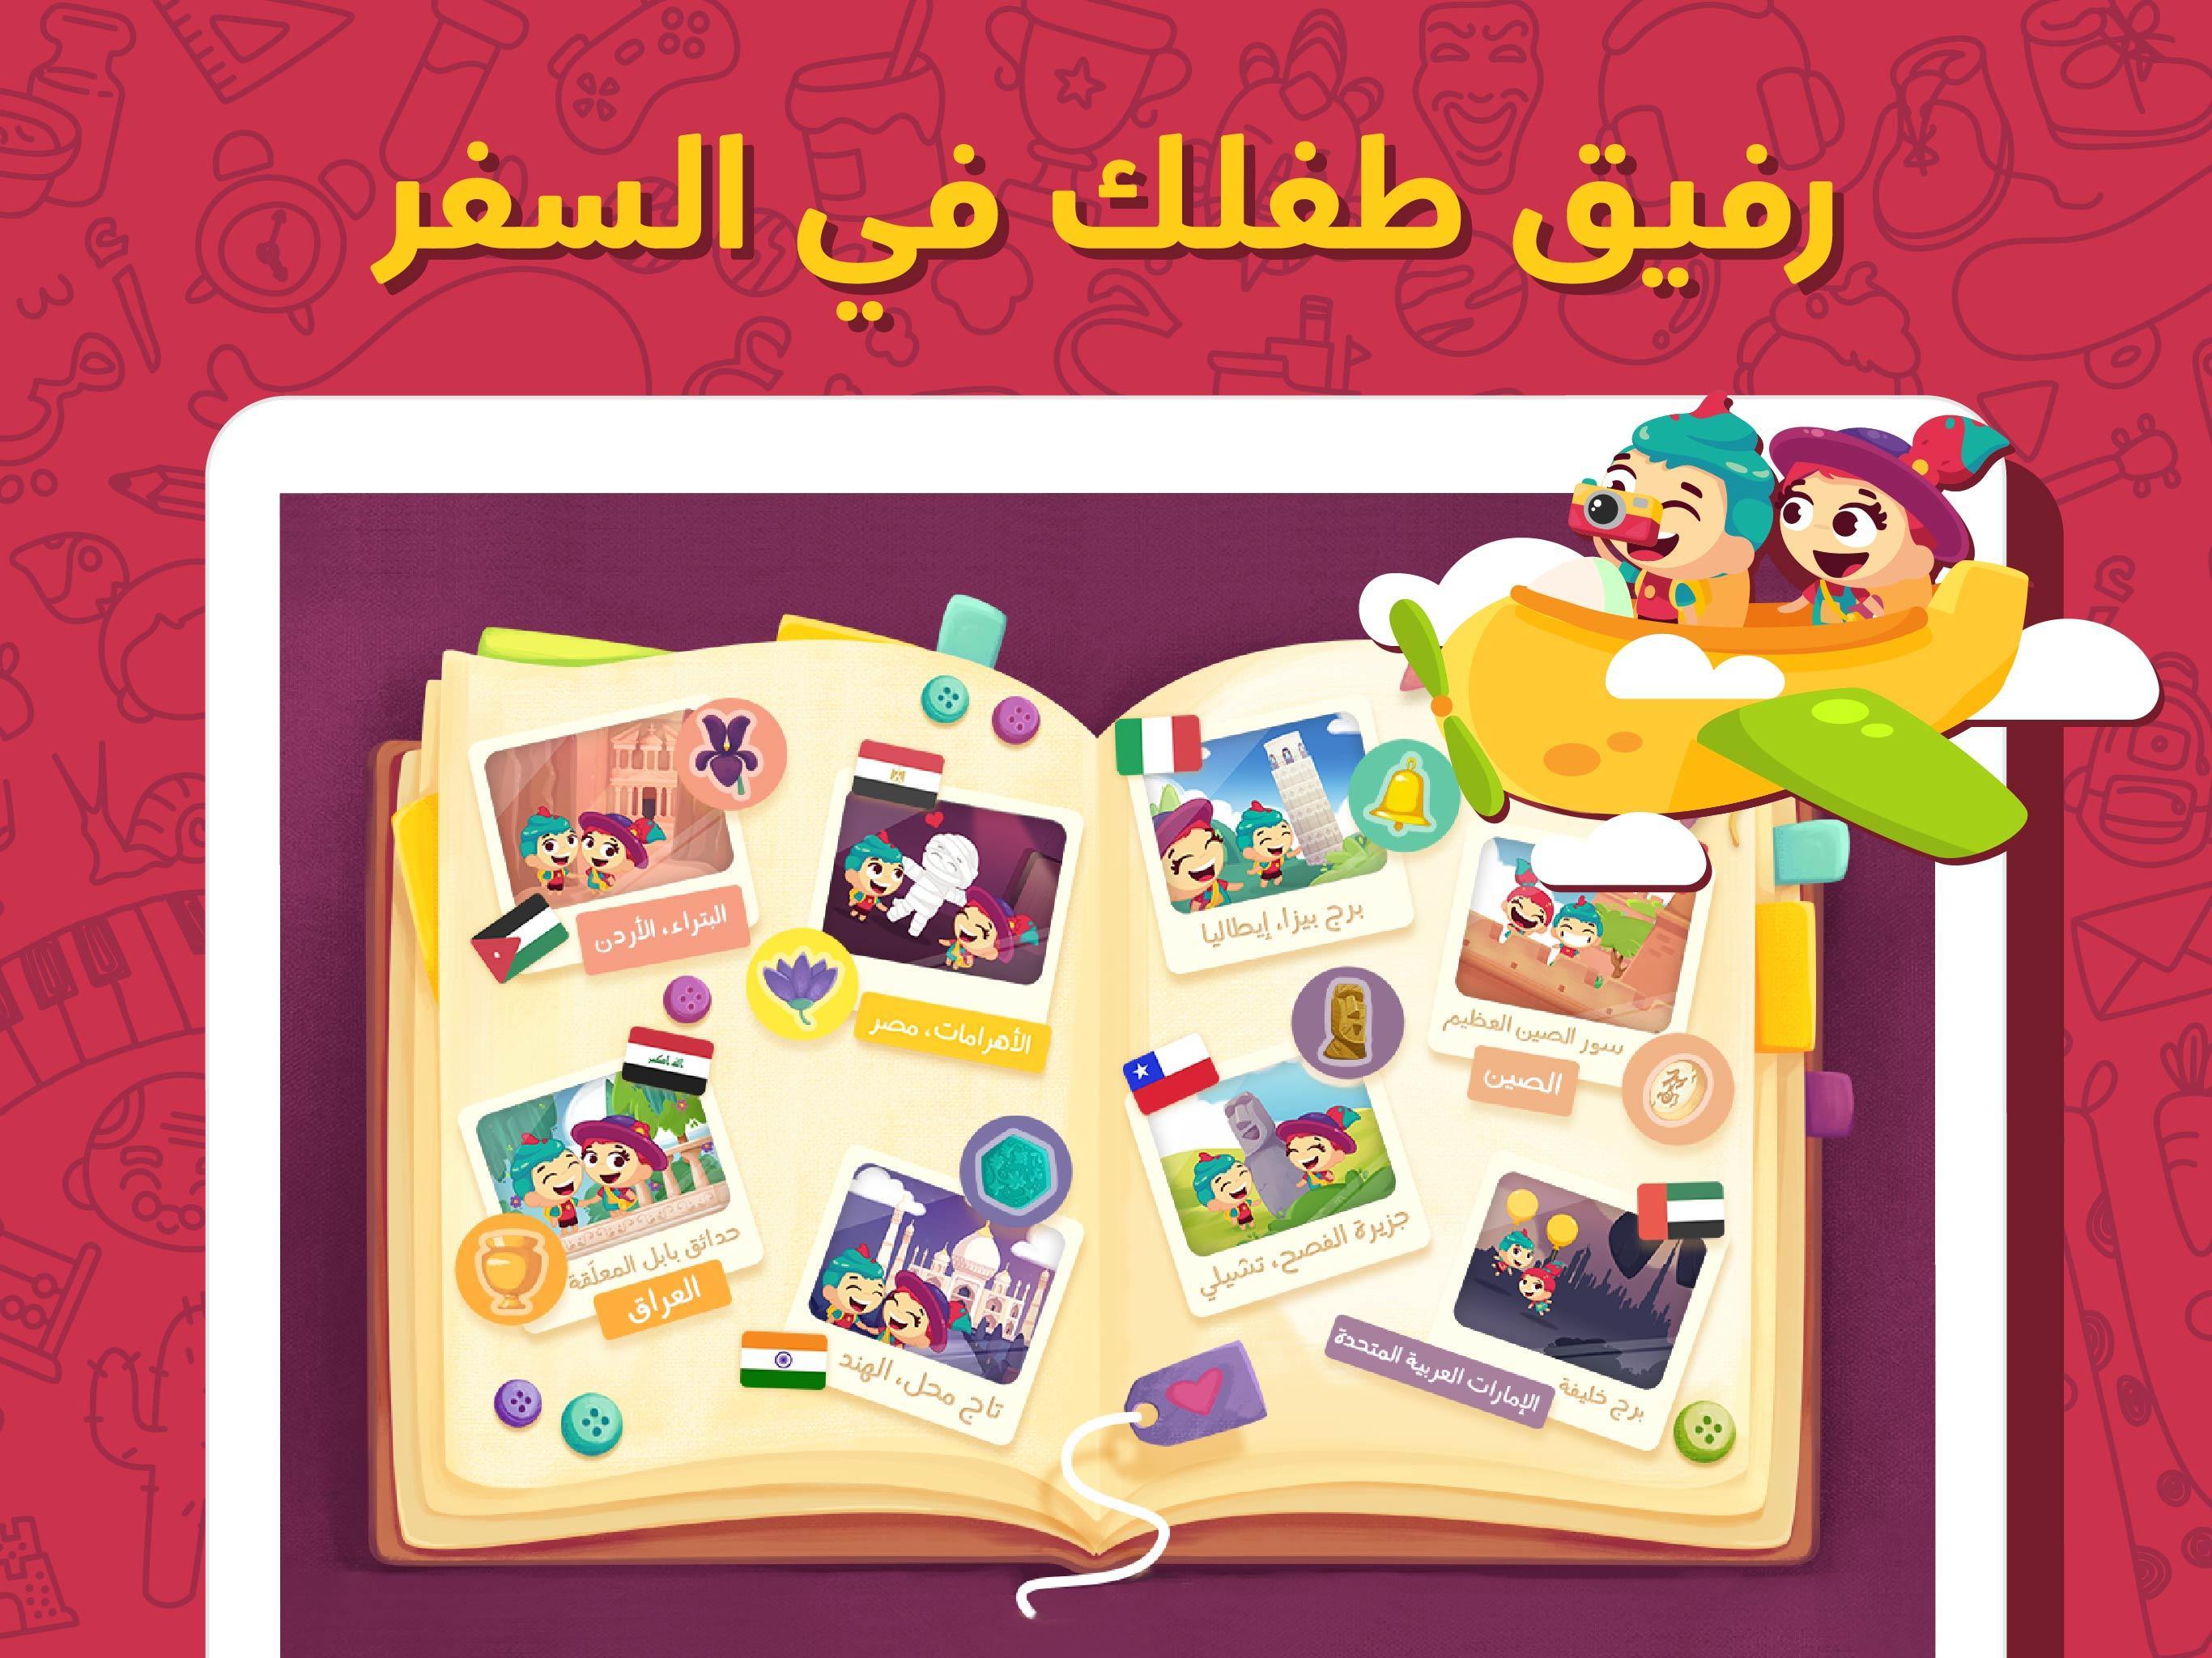 Lamsa Stories, Games, and Activities for Children 4.18.0 Screenshot 22